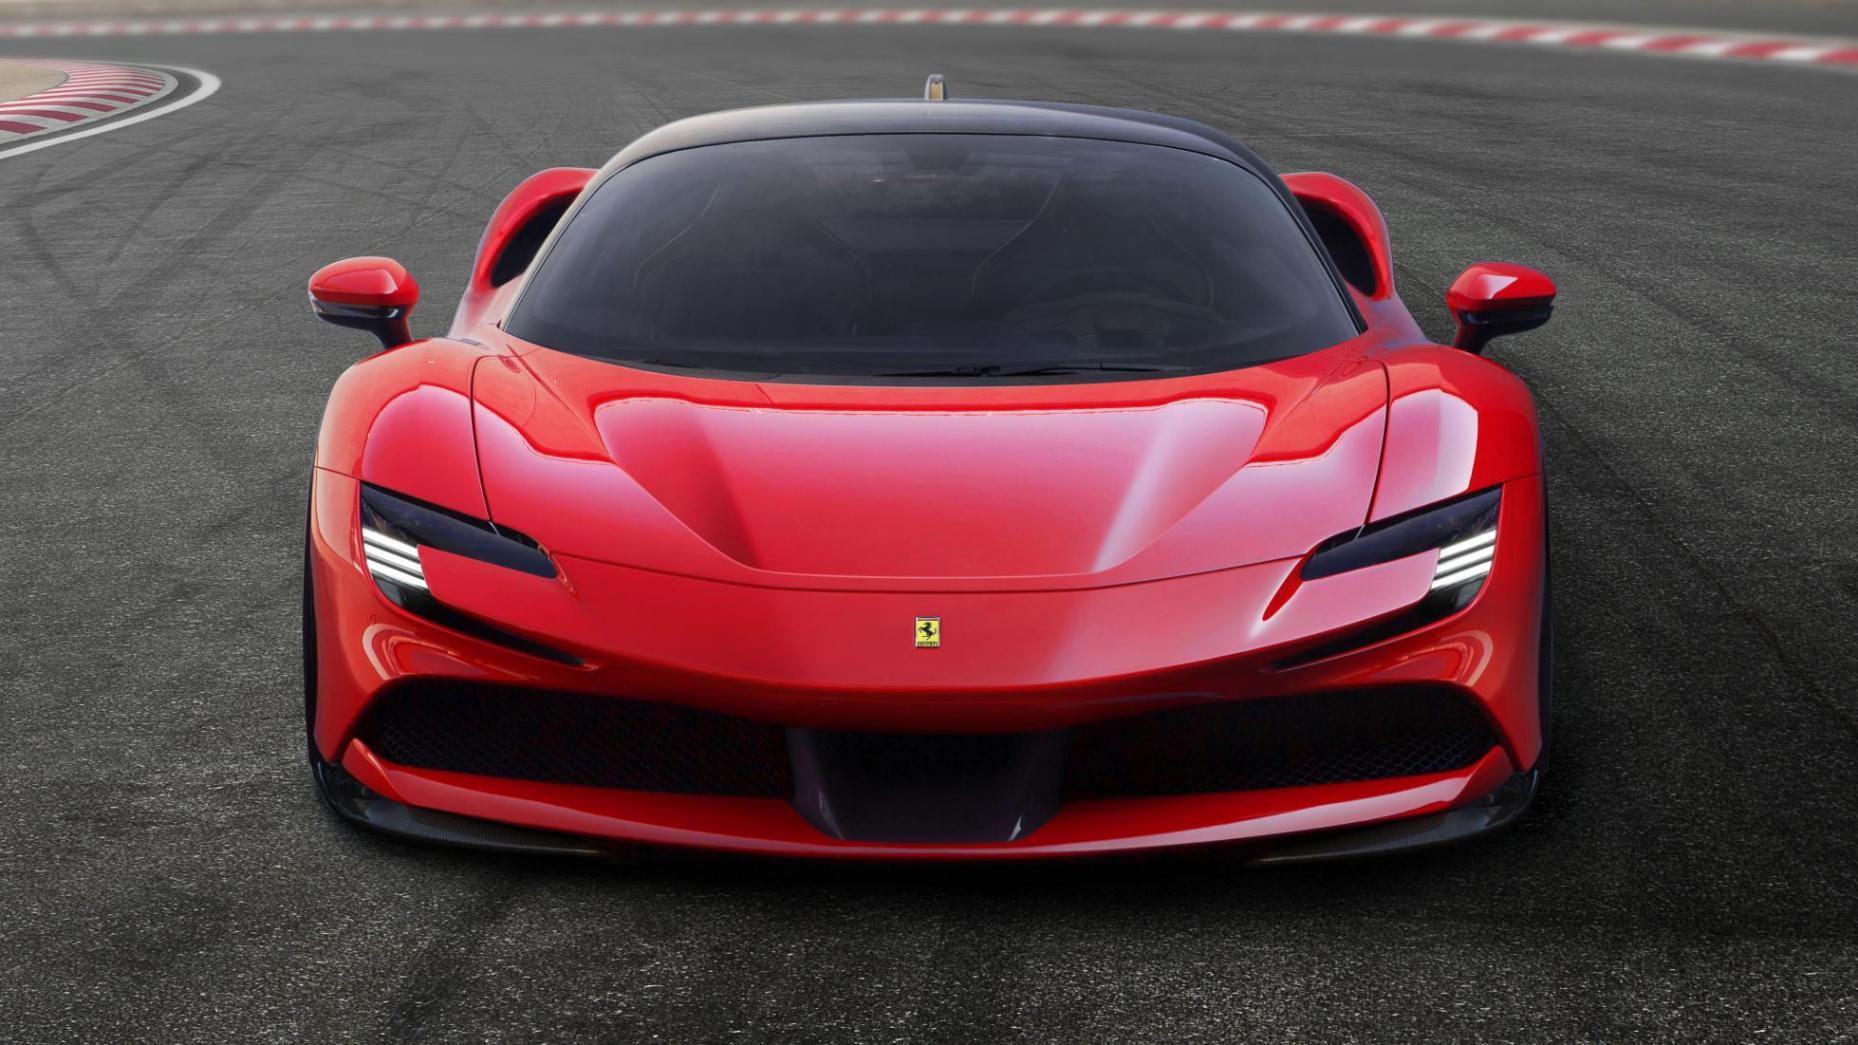 What’s the fastest Ferrari?